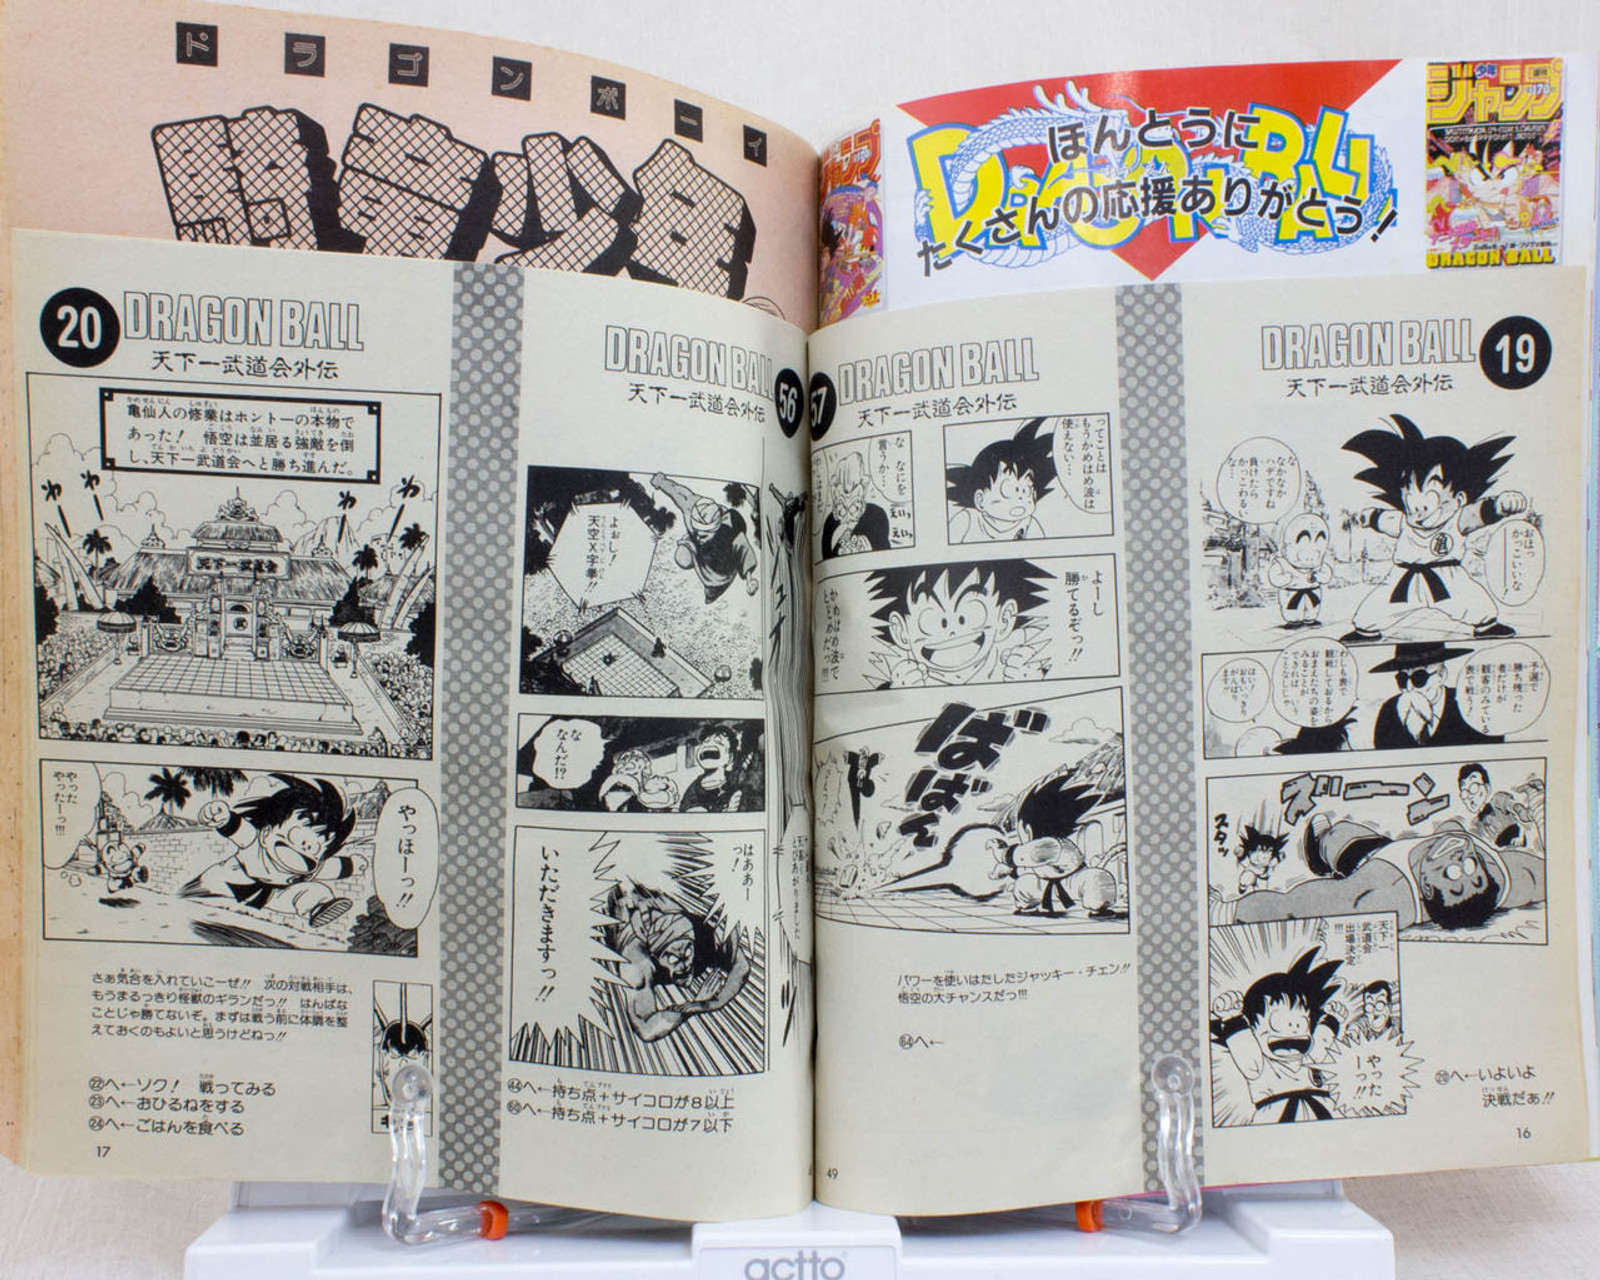 Dragon Ball Z Adventure Special Comics Book 1987 JAPAN MANGA ANIME